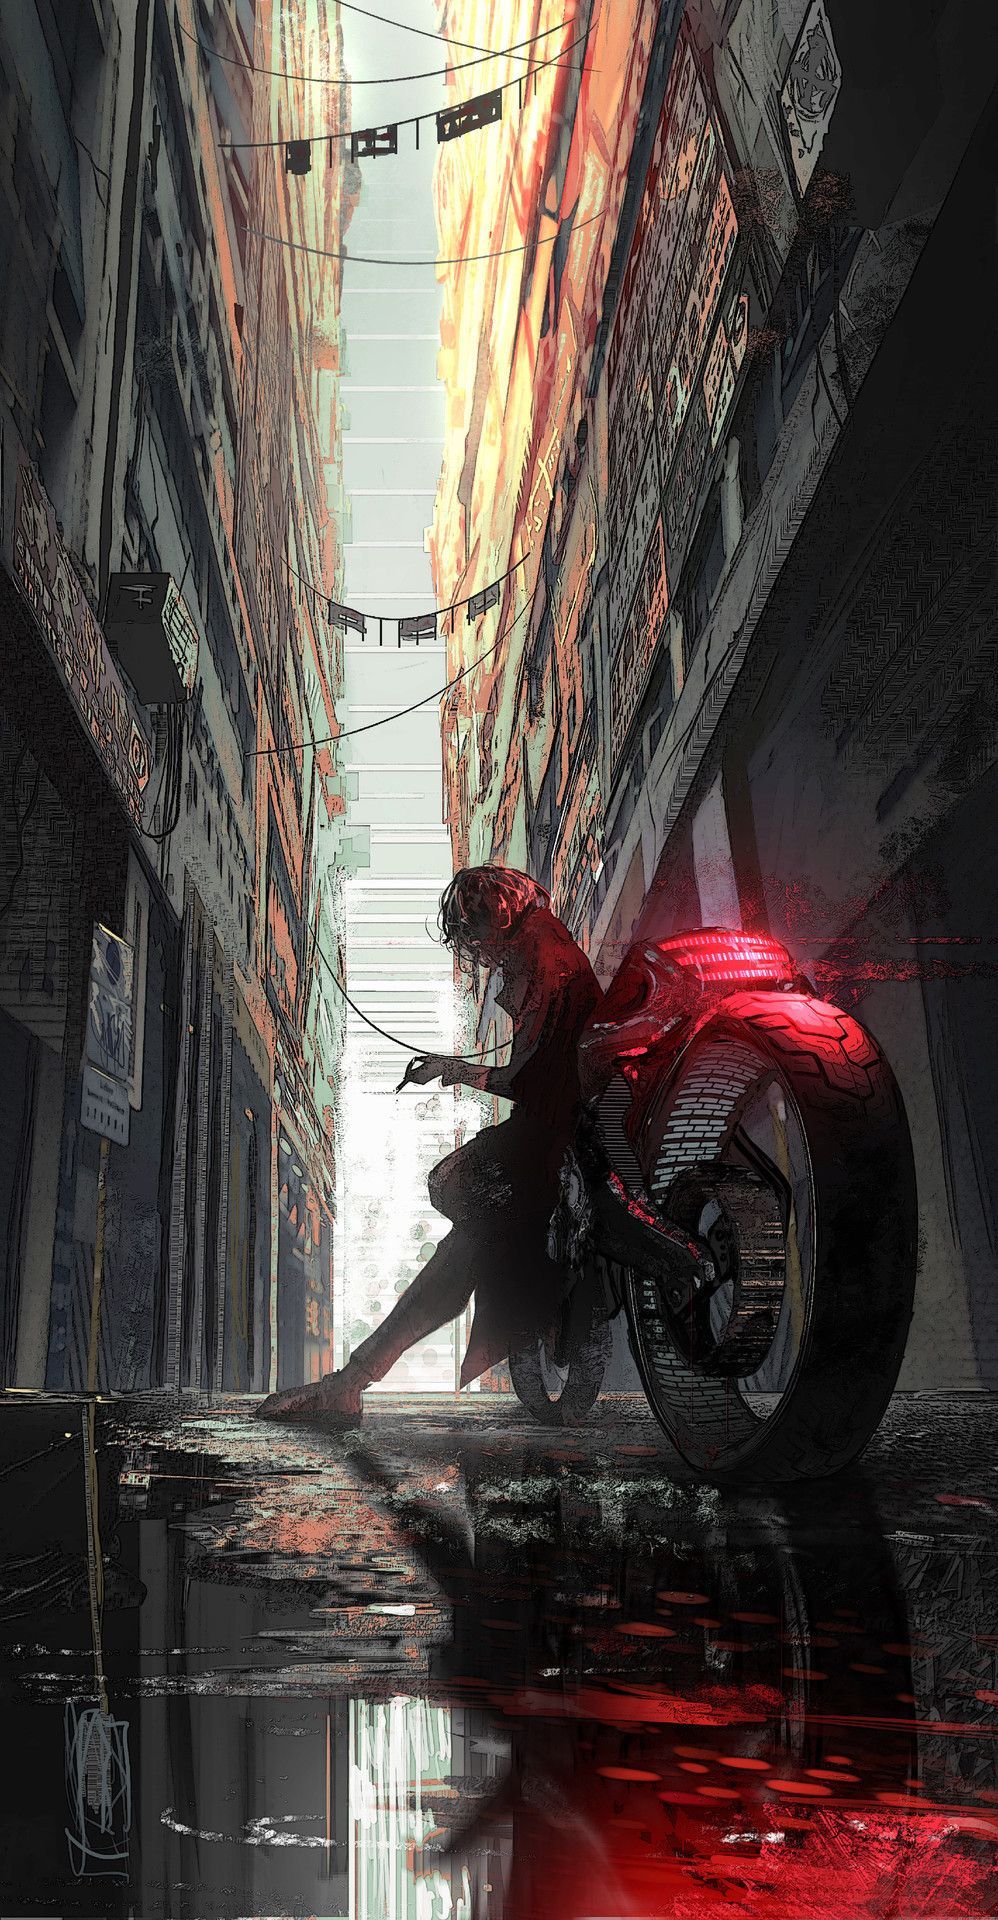 Motorcycle Cyberpunk Girl Wallpapers